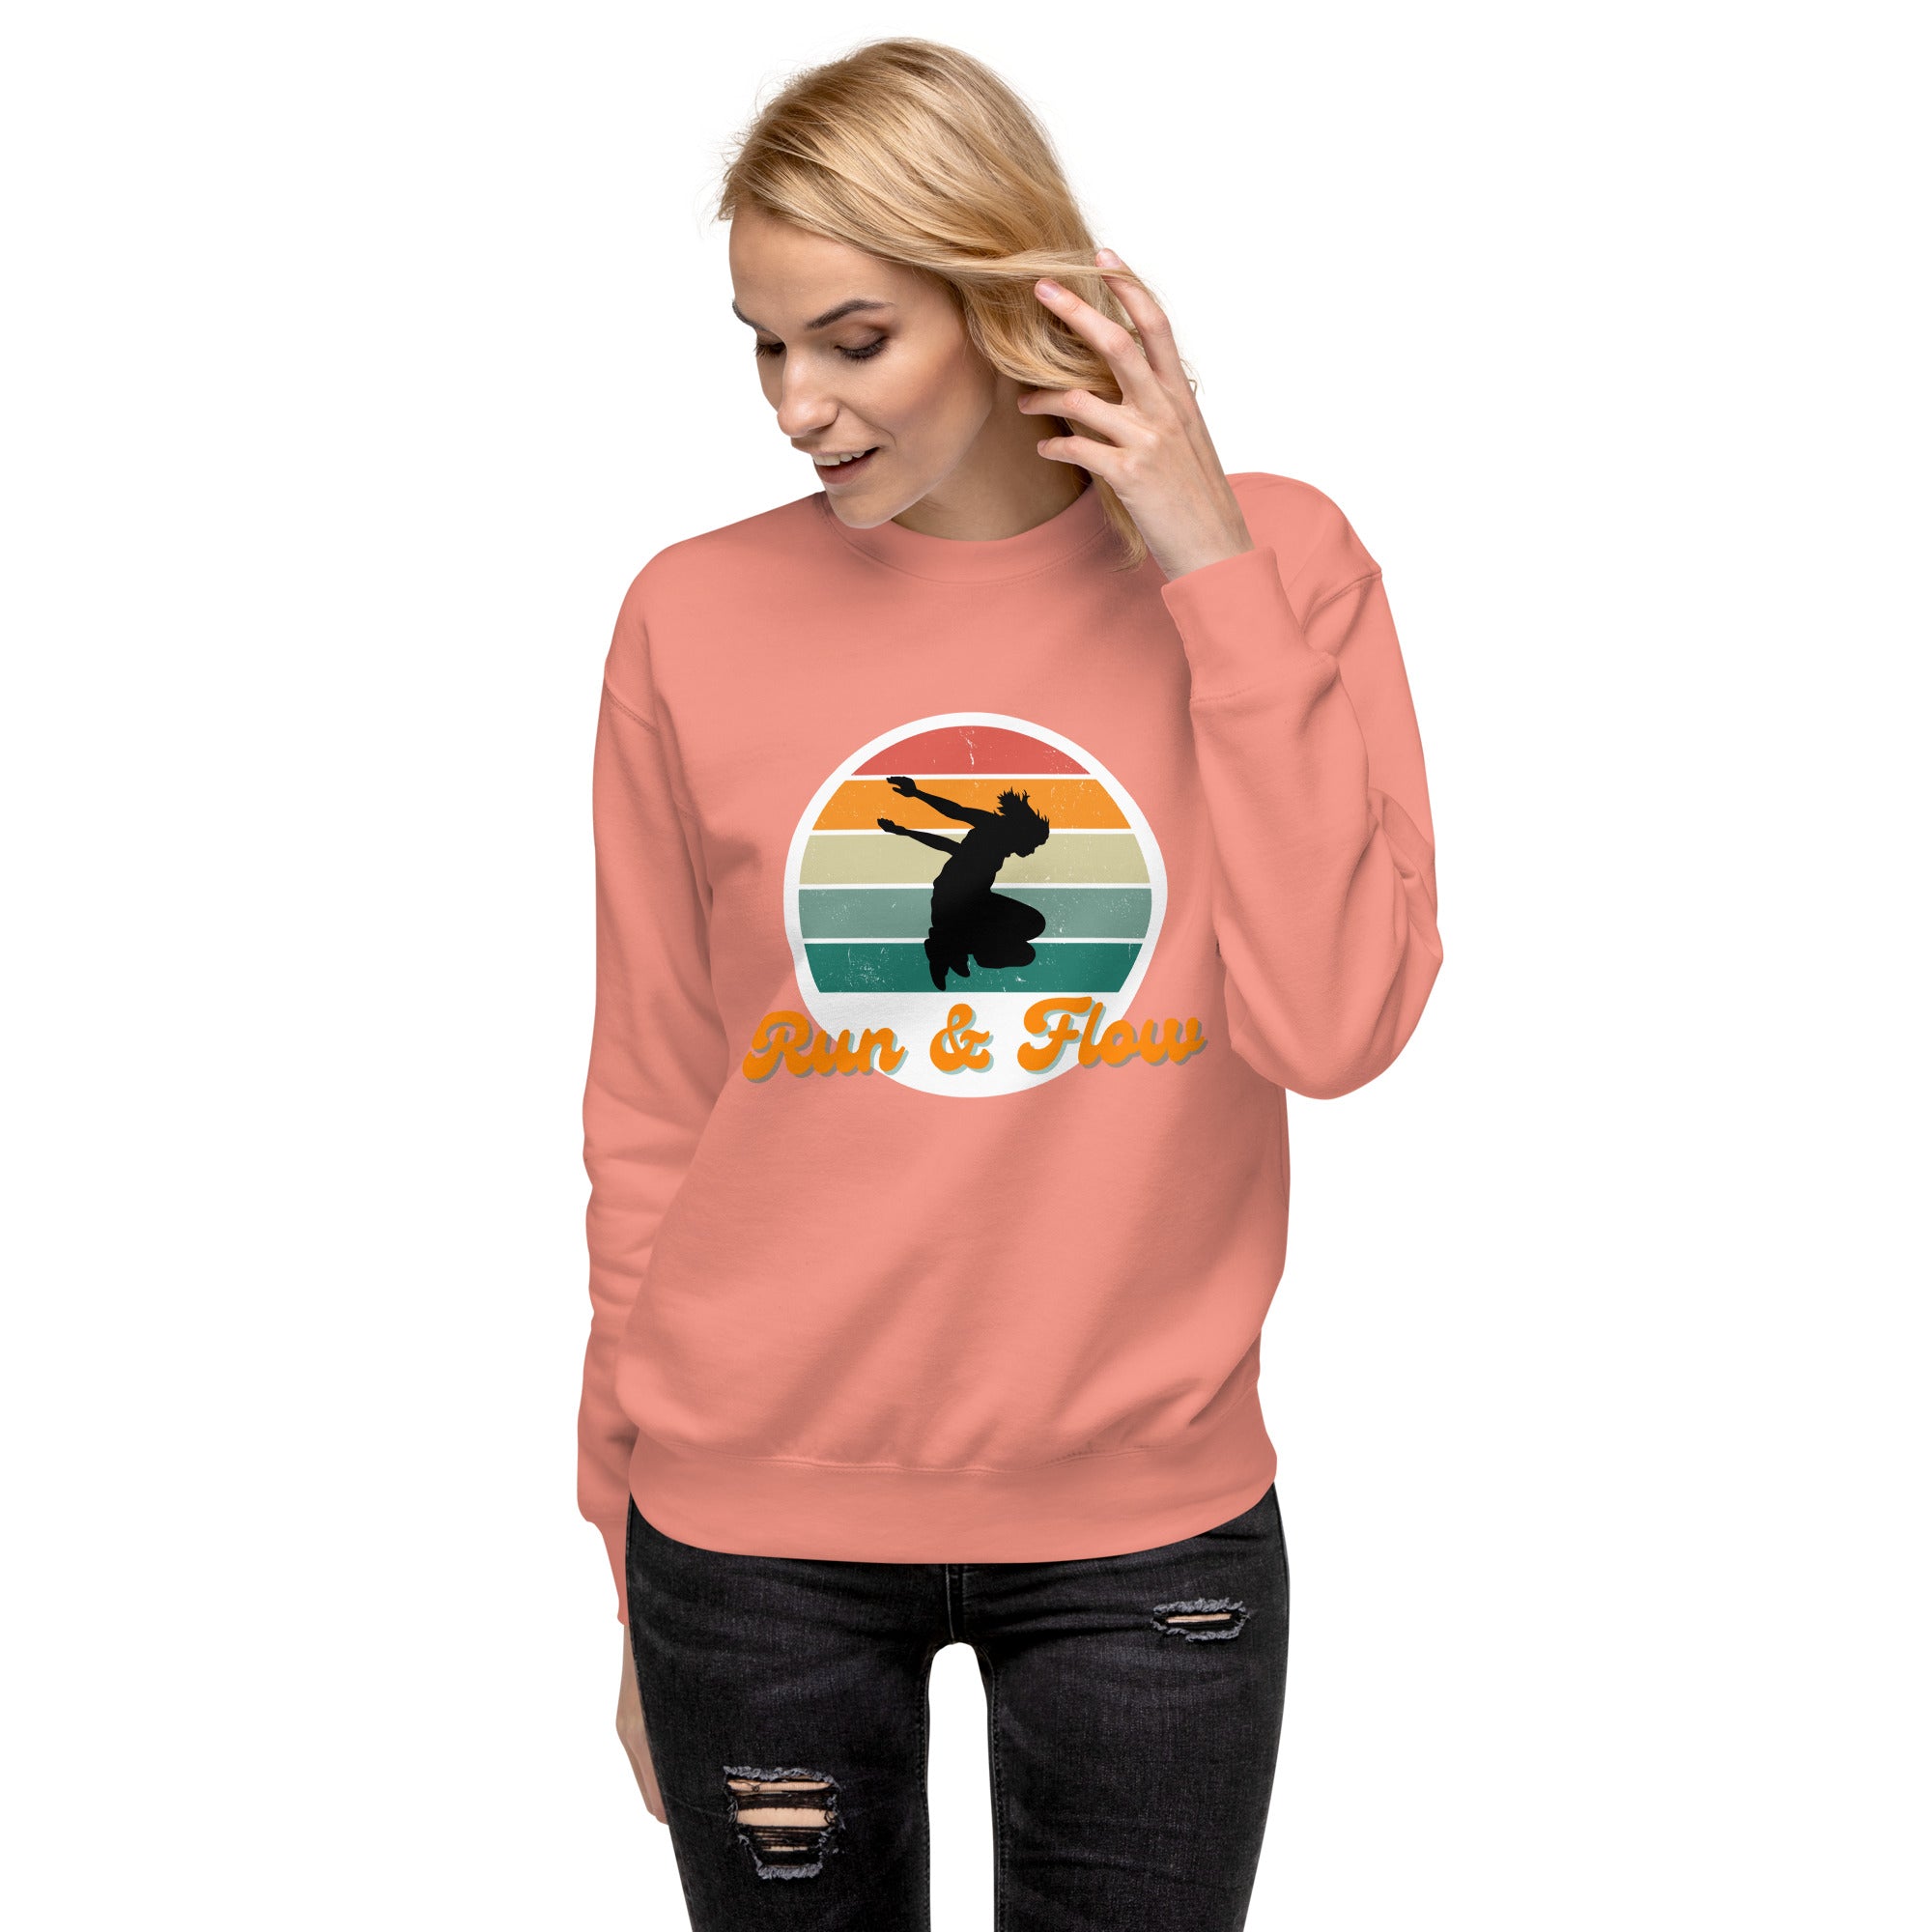 Run & Flow Women's Premium Sweatshirt